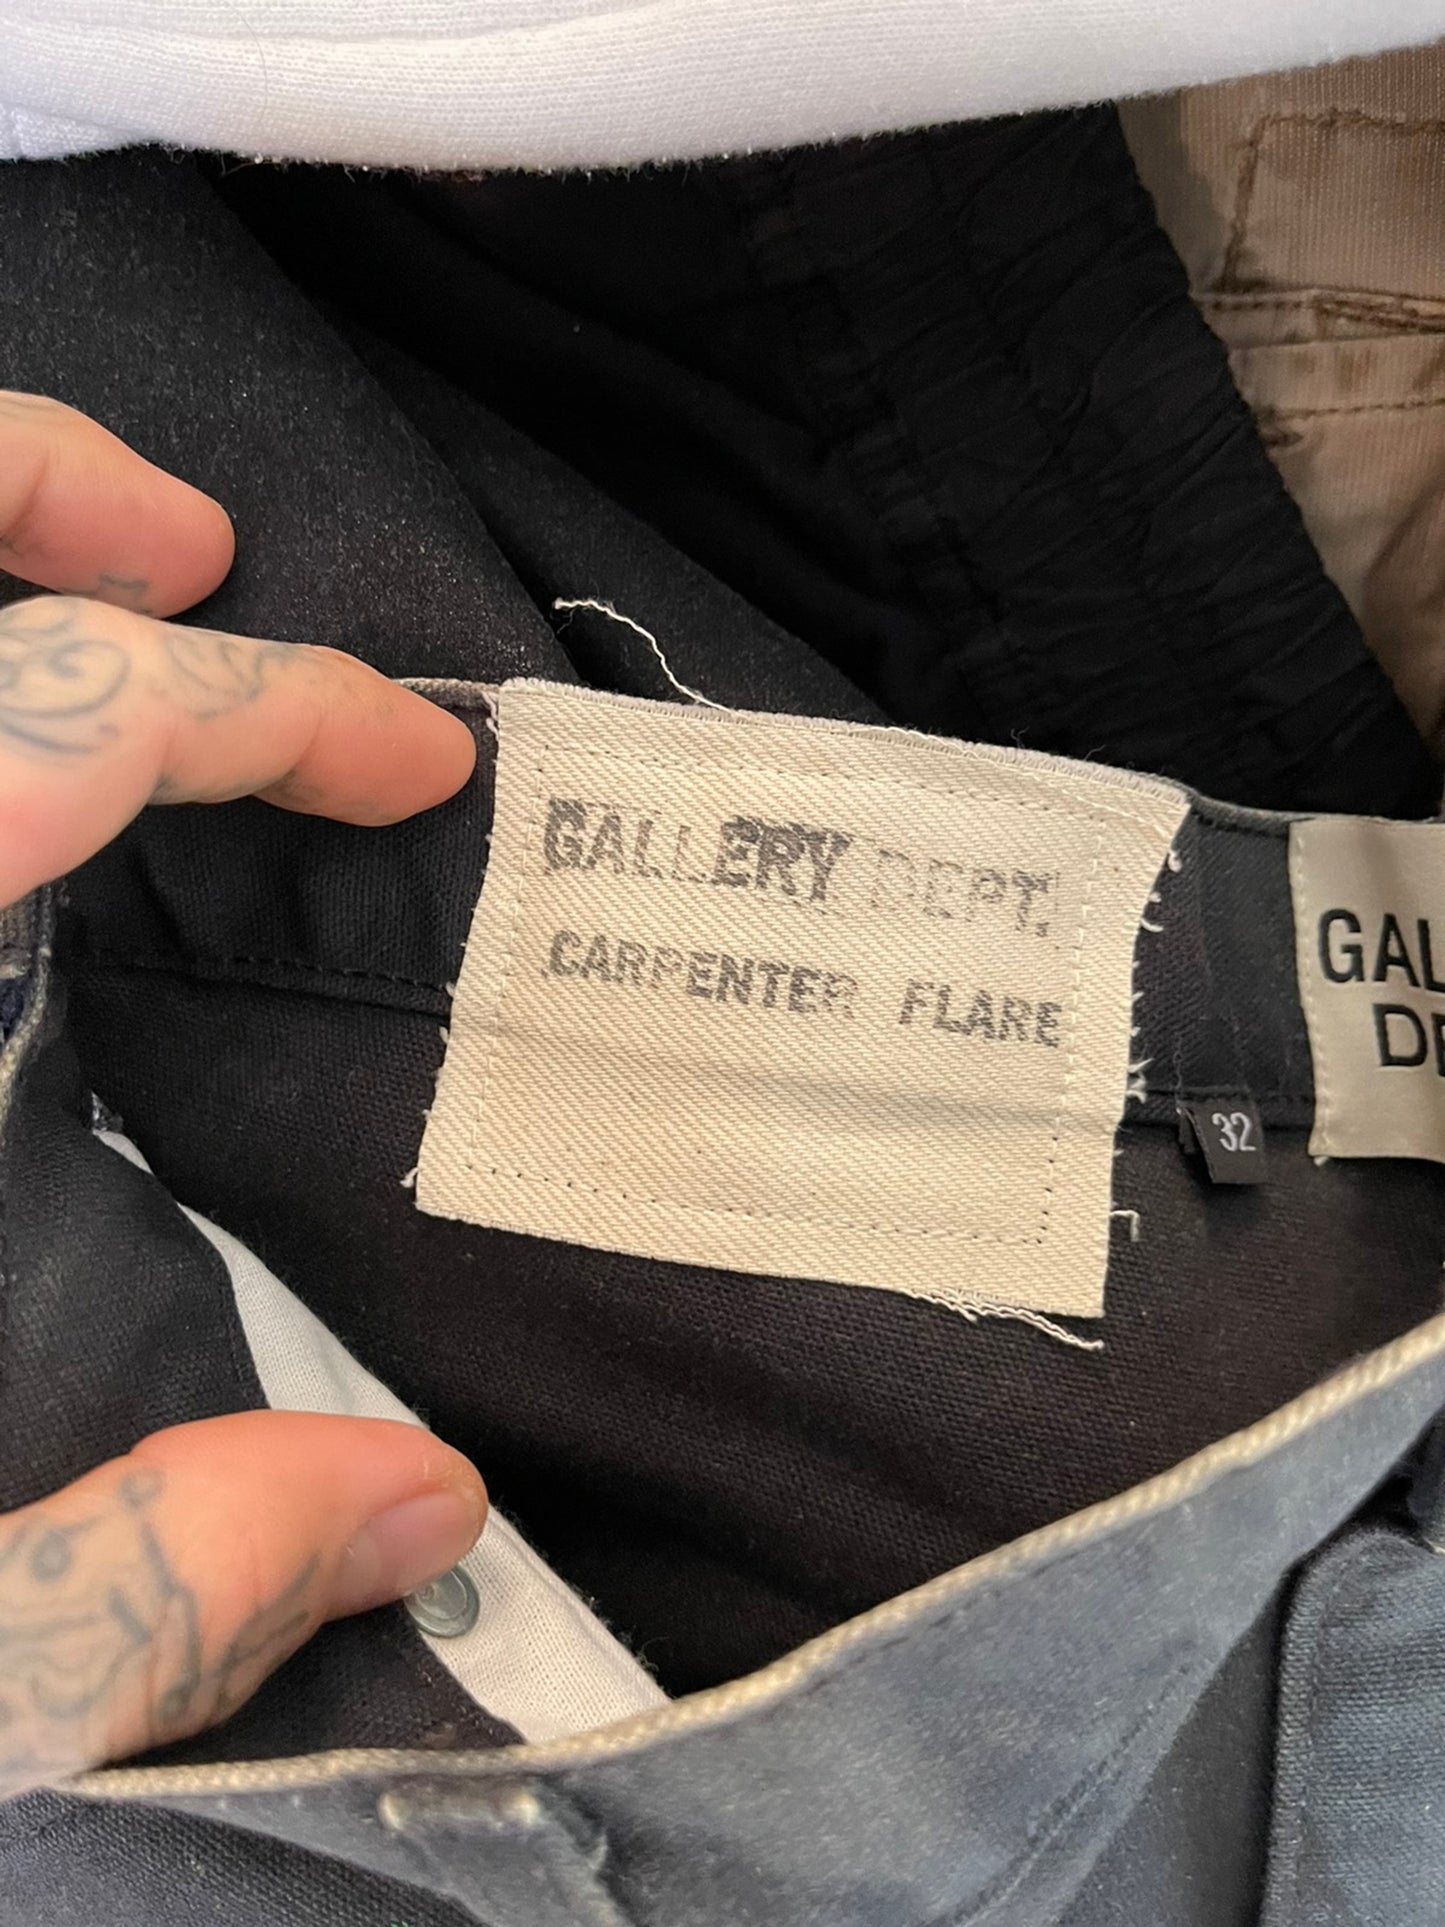 Gallery Dept 1/1 Custom Denim Flair Jeans SZ32